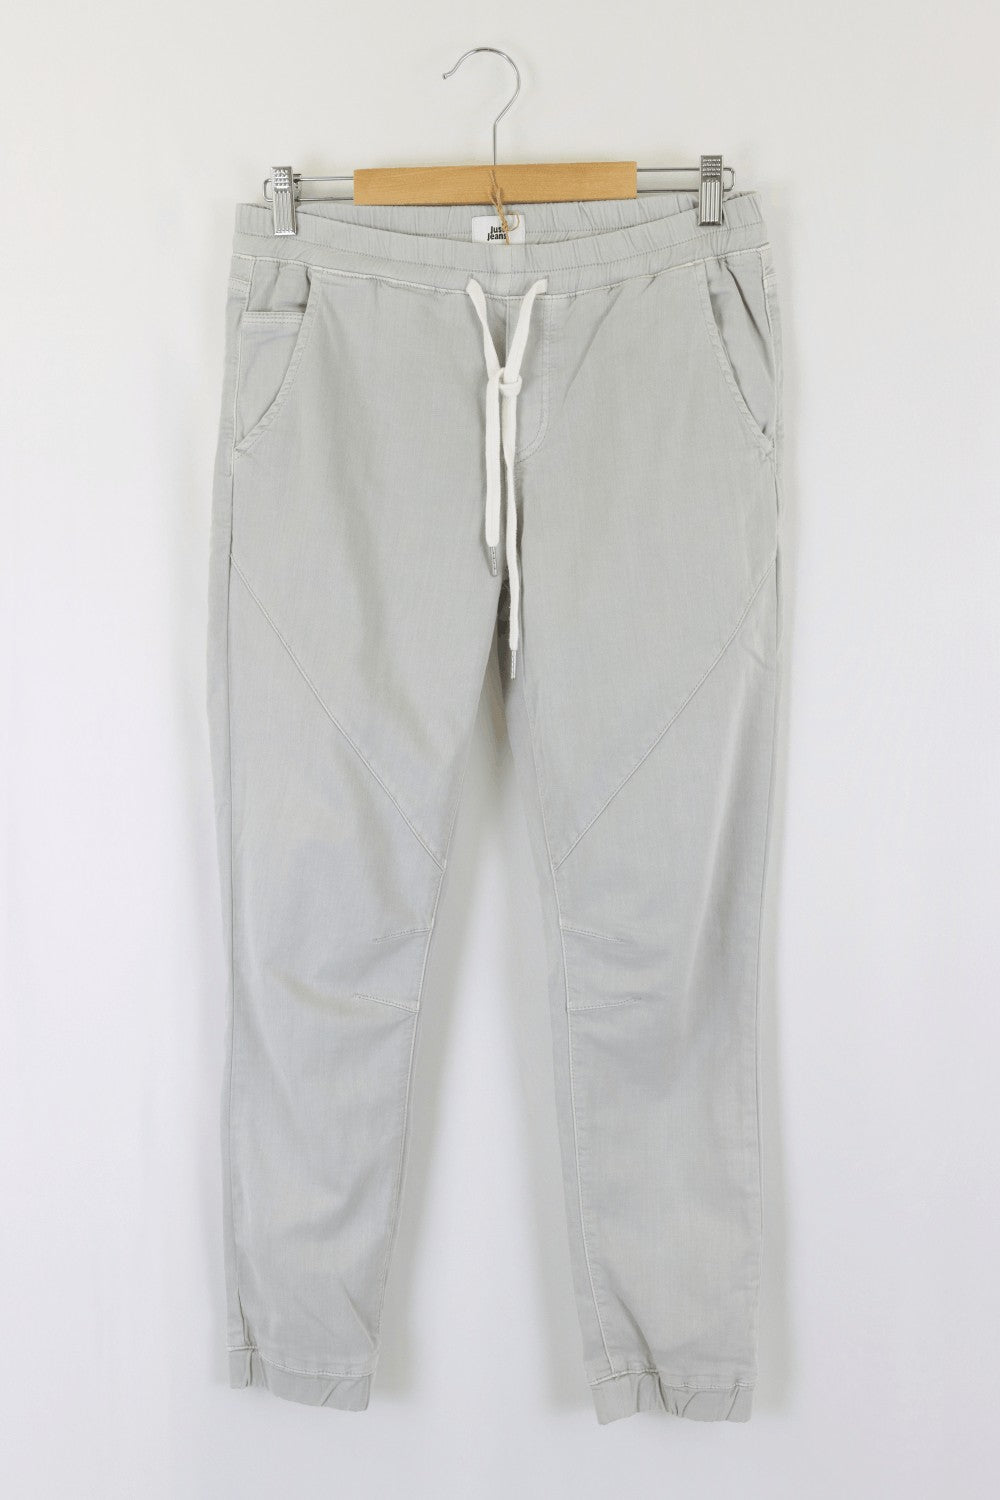 Just Jeans Grey Pants 8